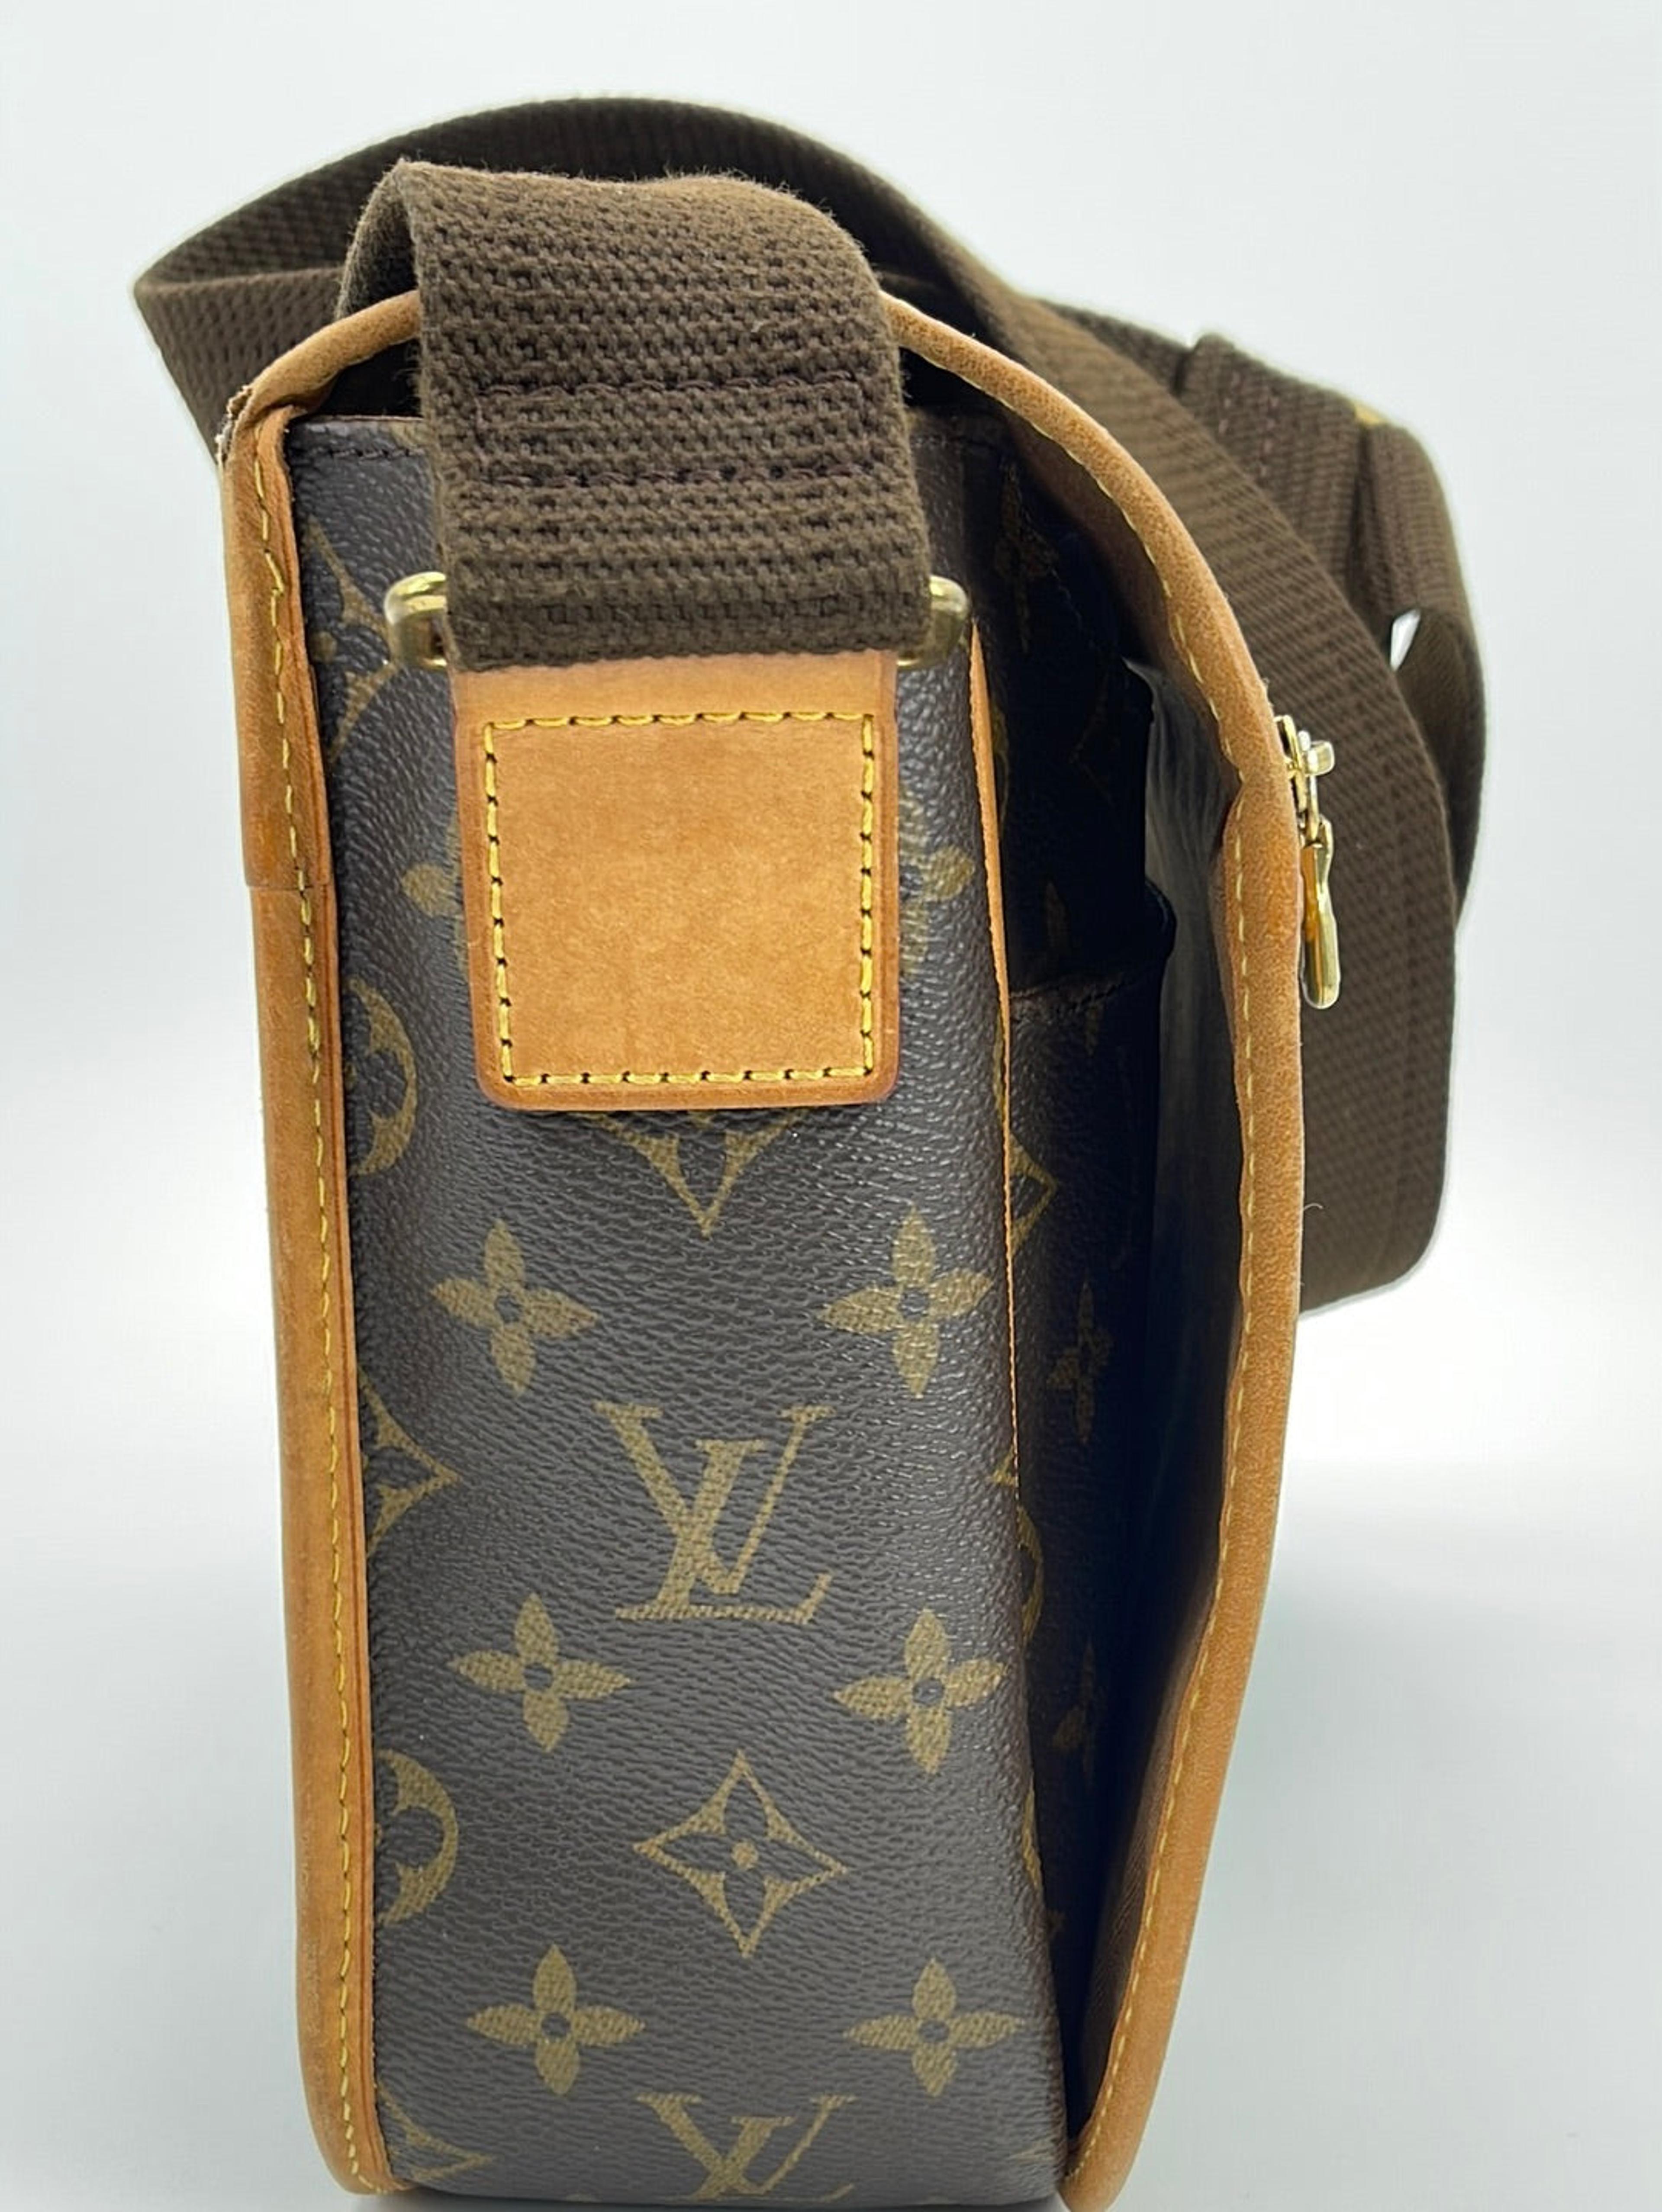 Louis Vuitton Vintage Monogram Bosphore Messenger Bag - Brown